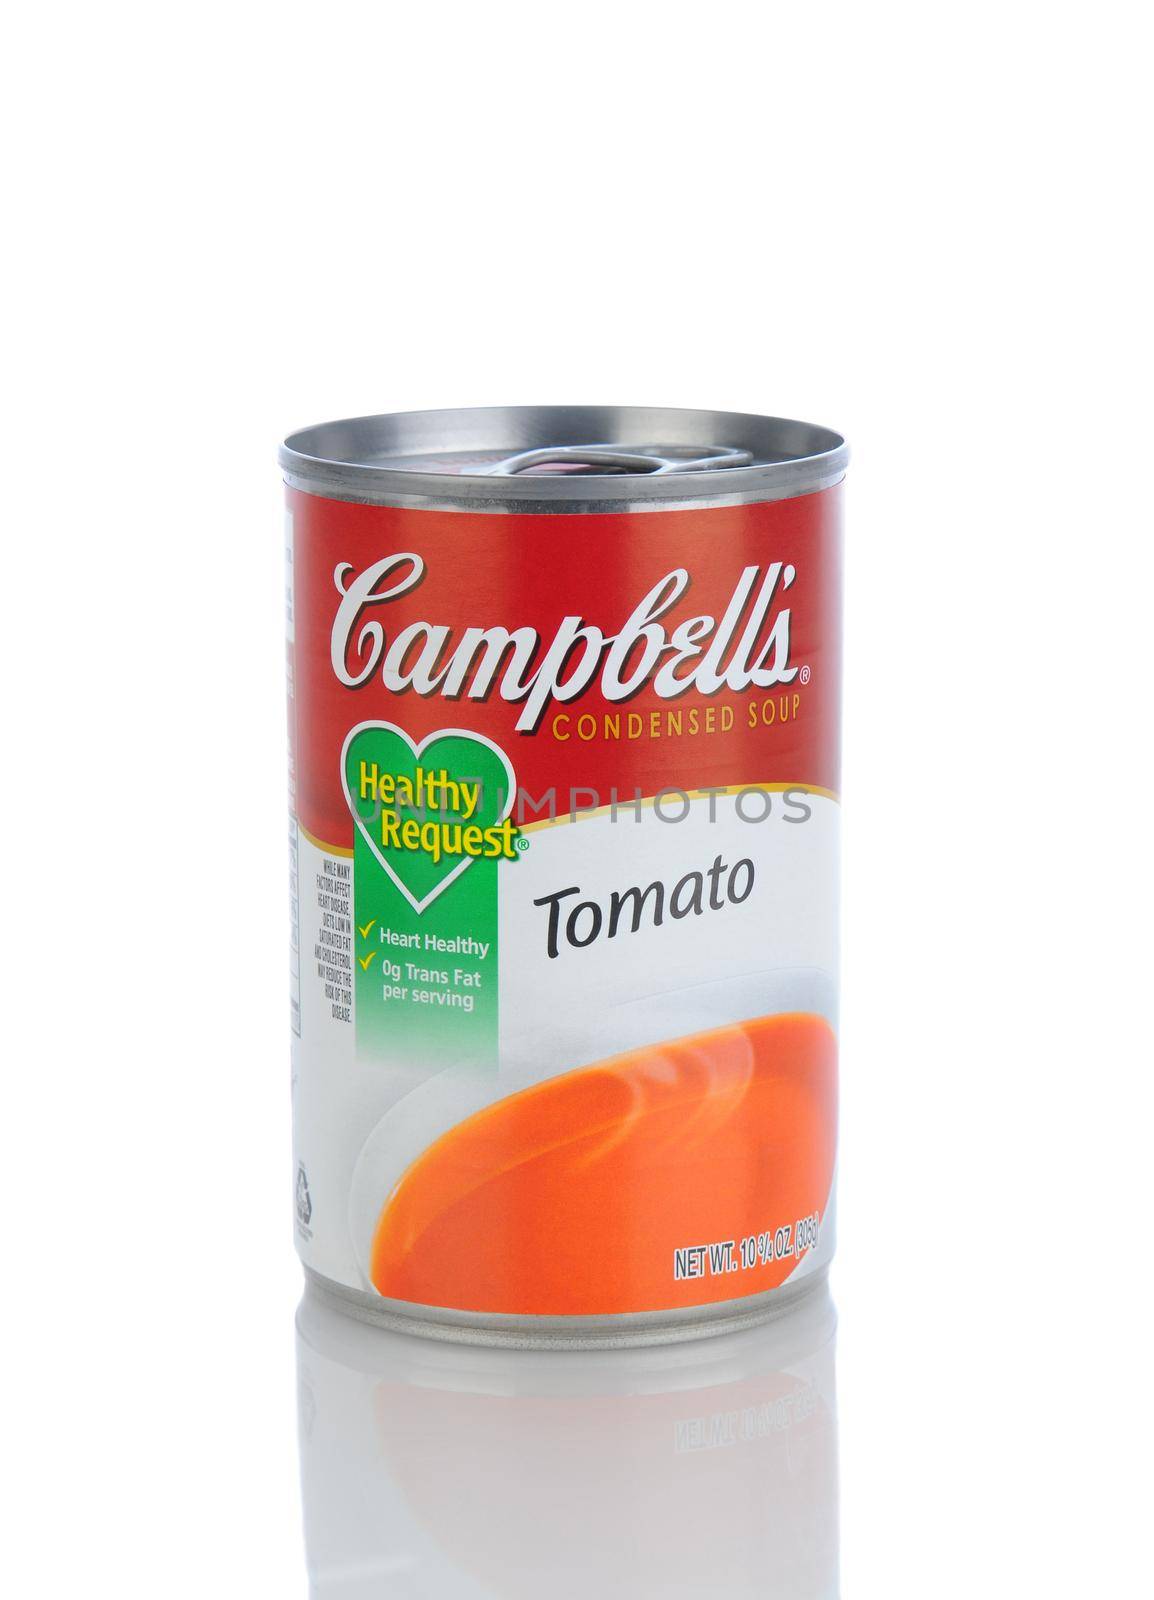 Campbells Tomato Soup by sCukrov